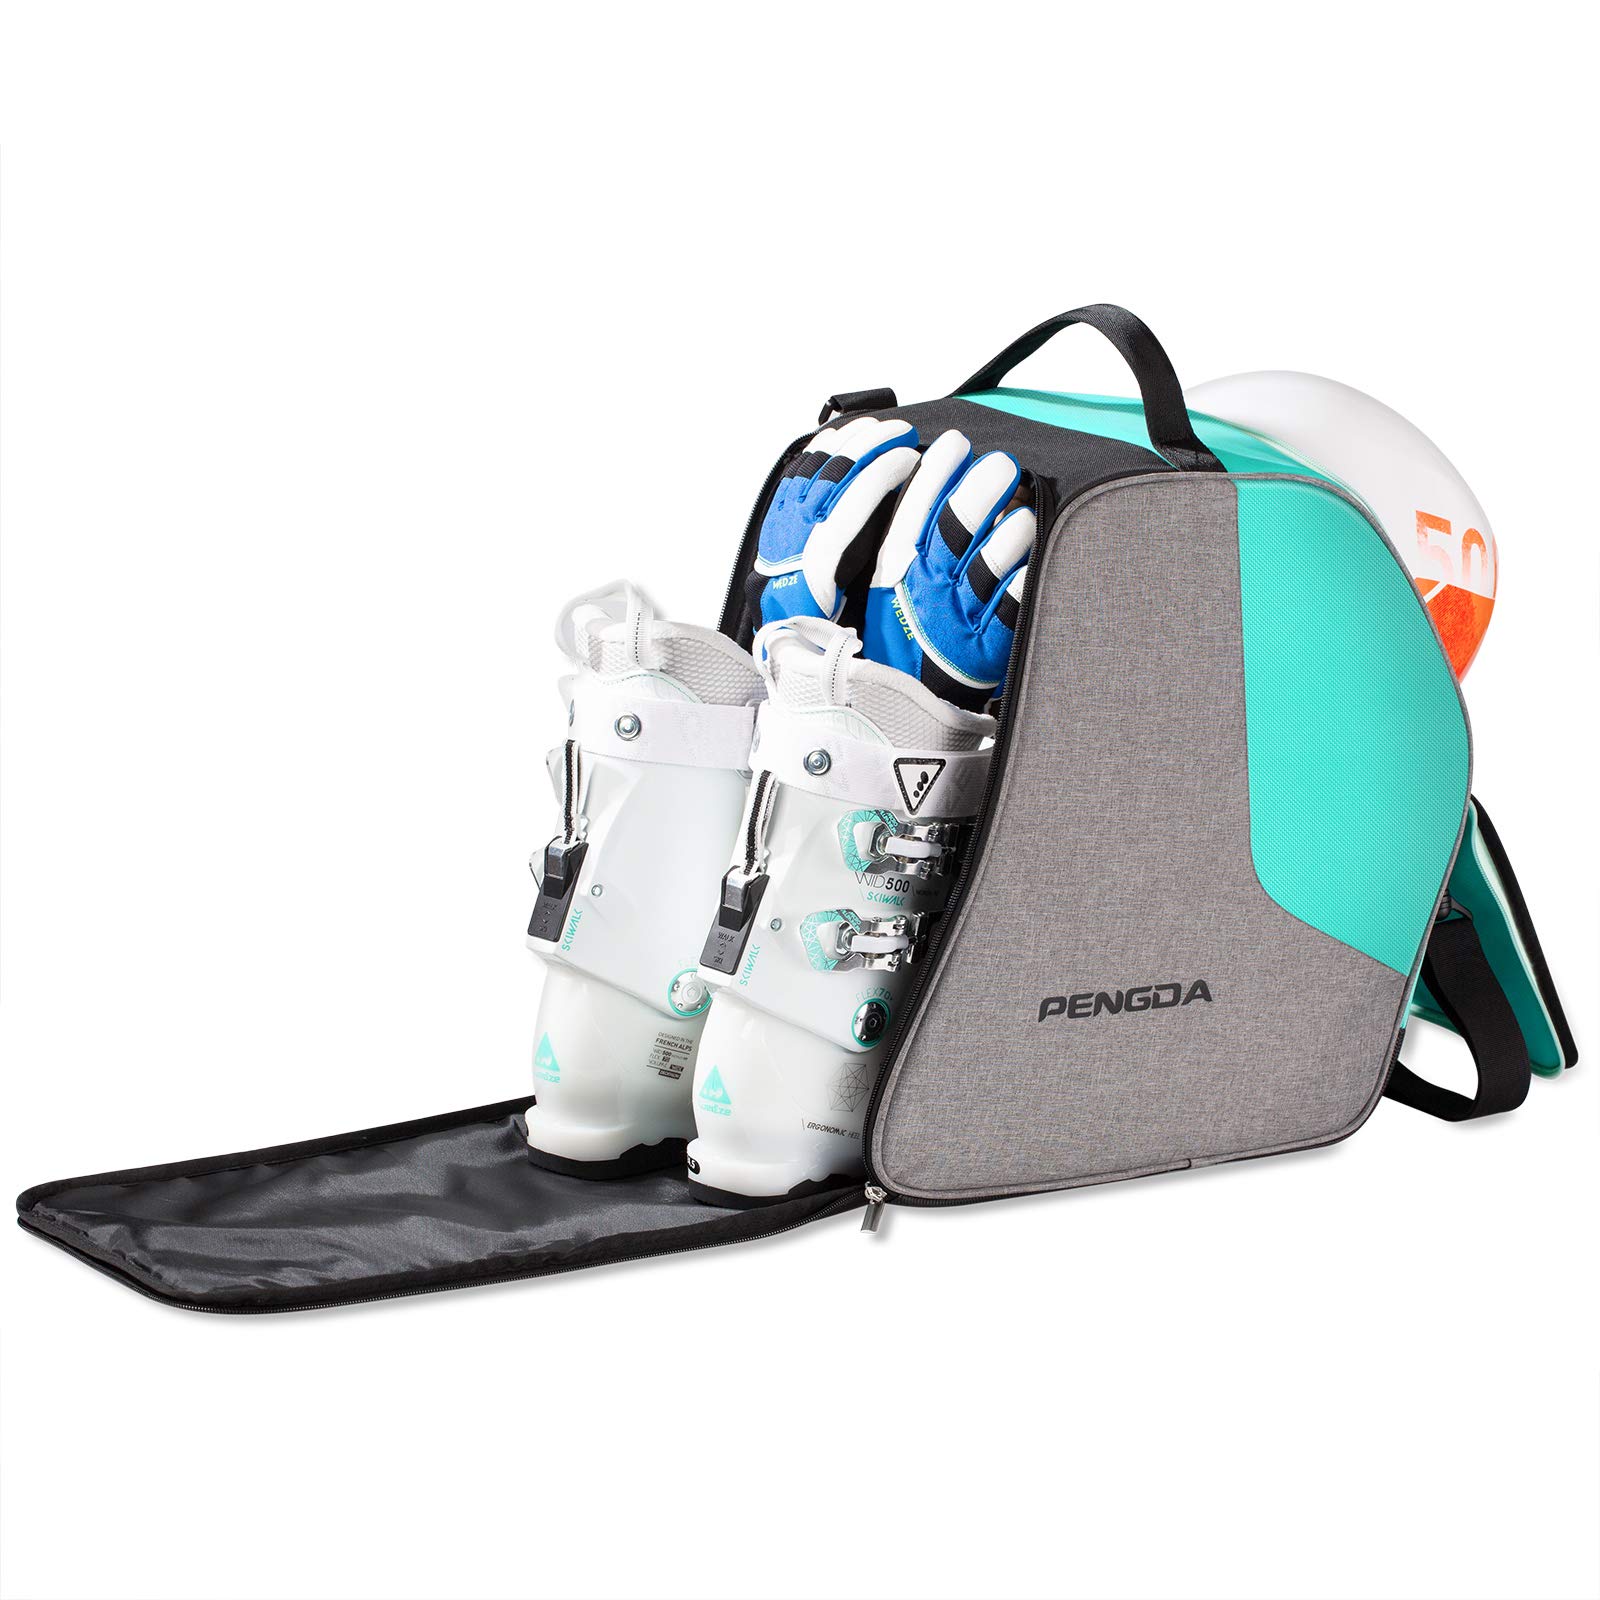 PENGDA Ski Boot Bag -Ski Boots Snowboard Boots Bag Waterproof Travel Boot Bag for Ski Helmets, Goggles, Gloves, Ski Apparel & Bo